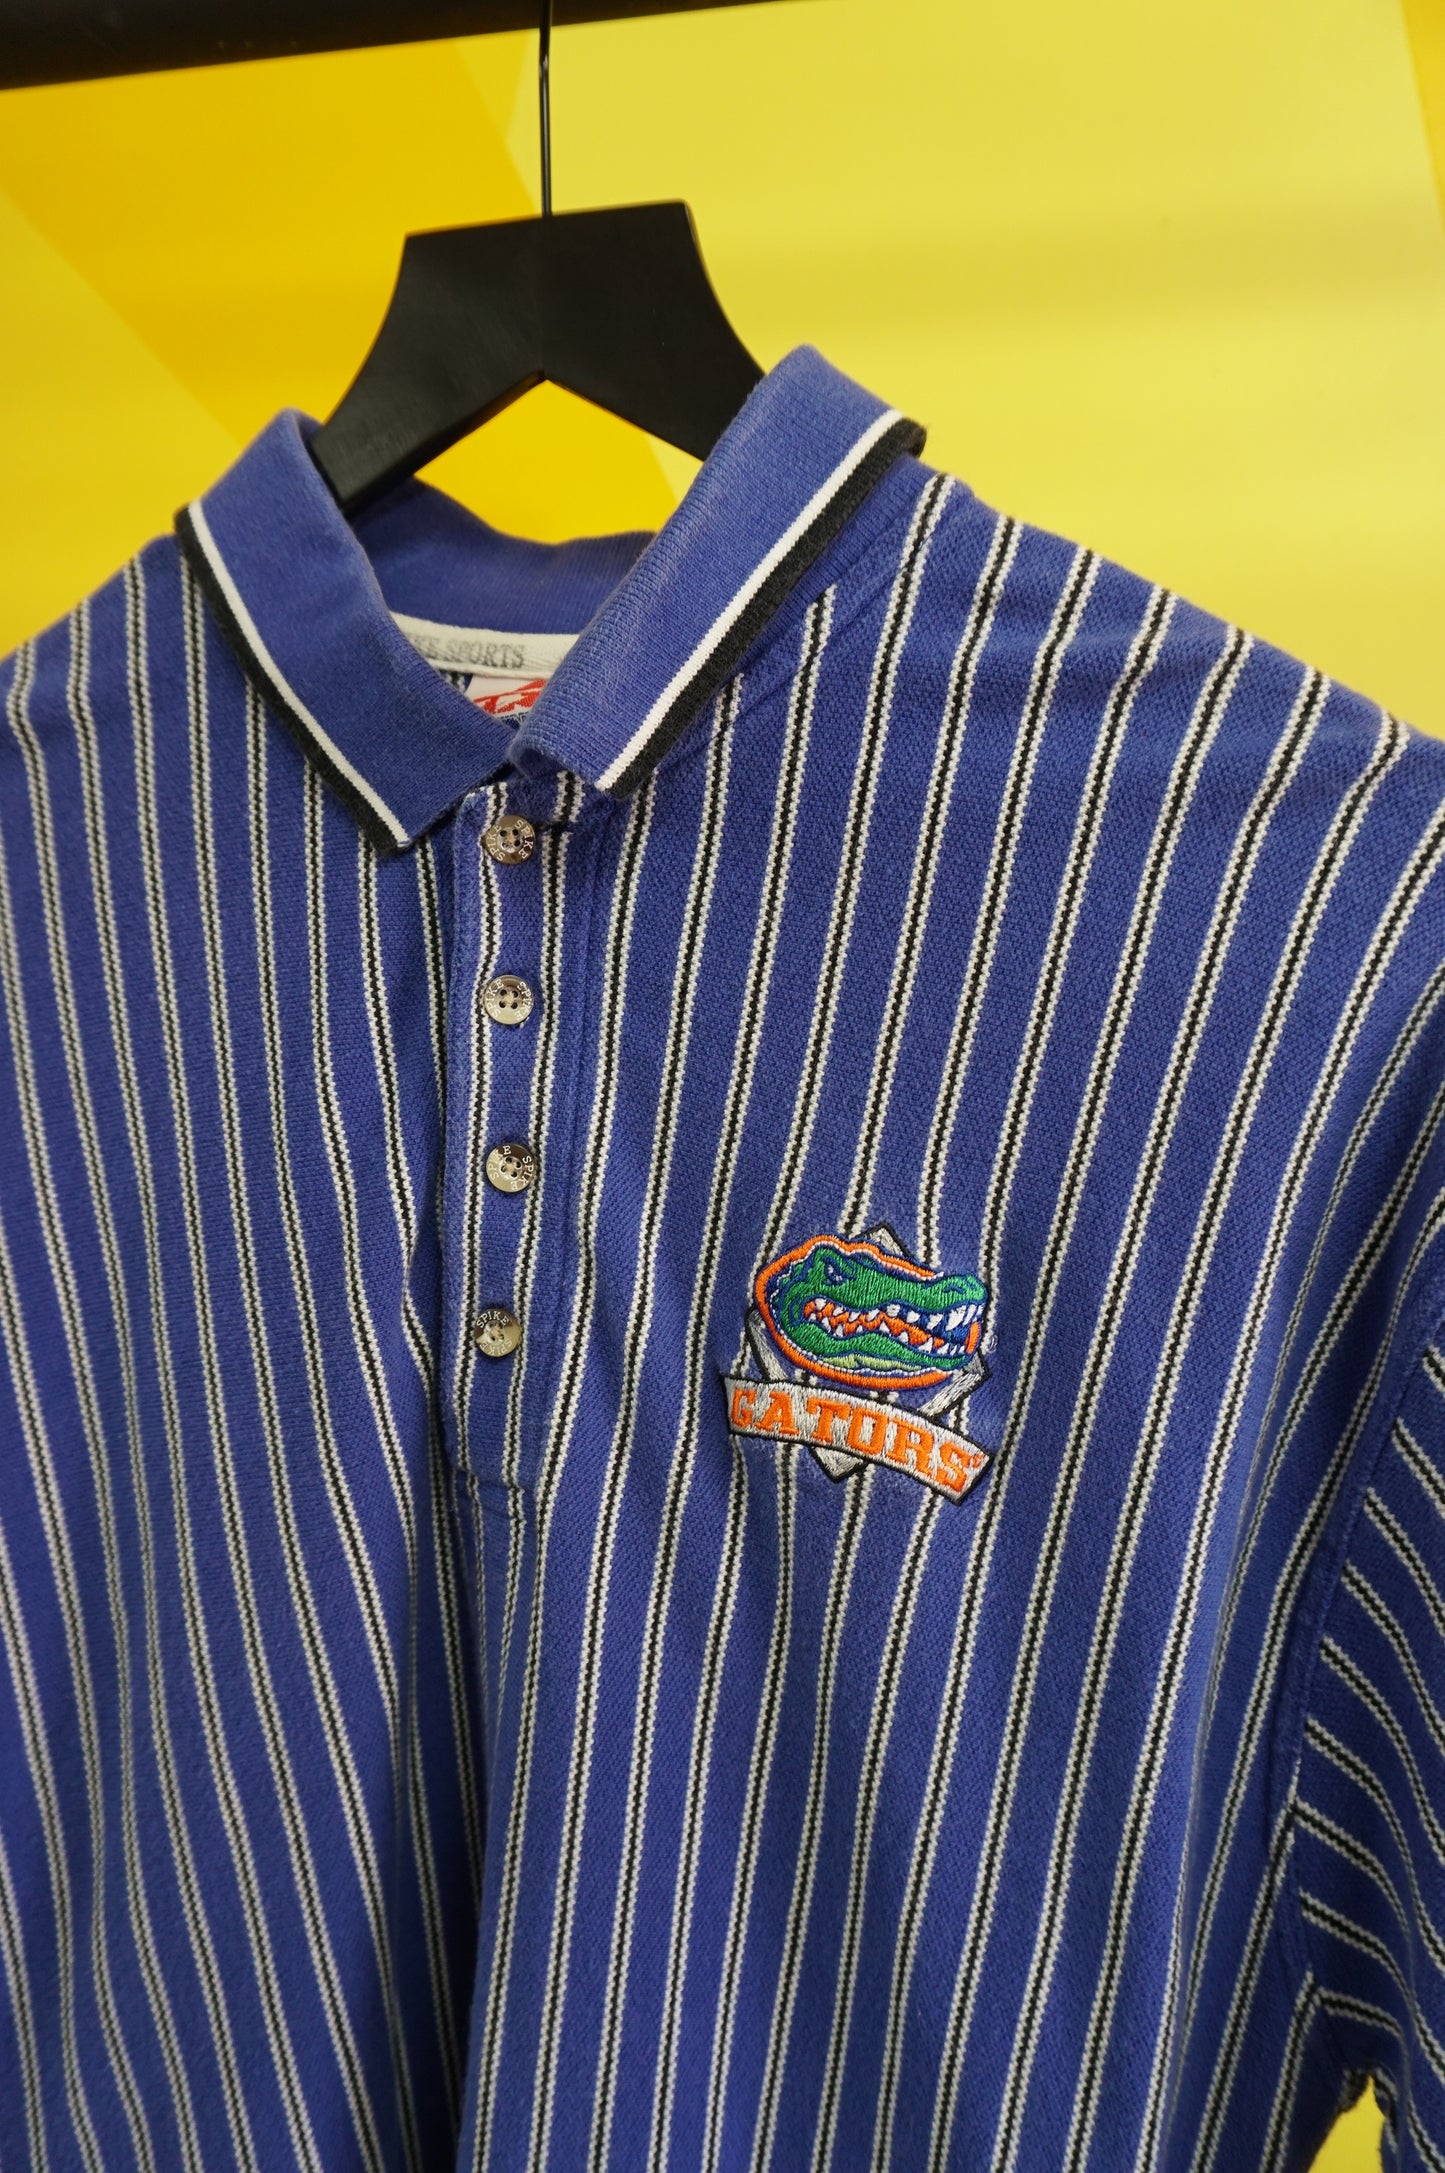 (M/L) Vtg Florida Gators Striped Polo Shirt